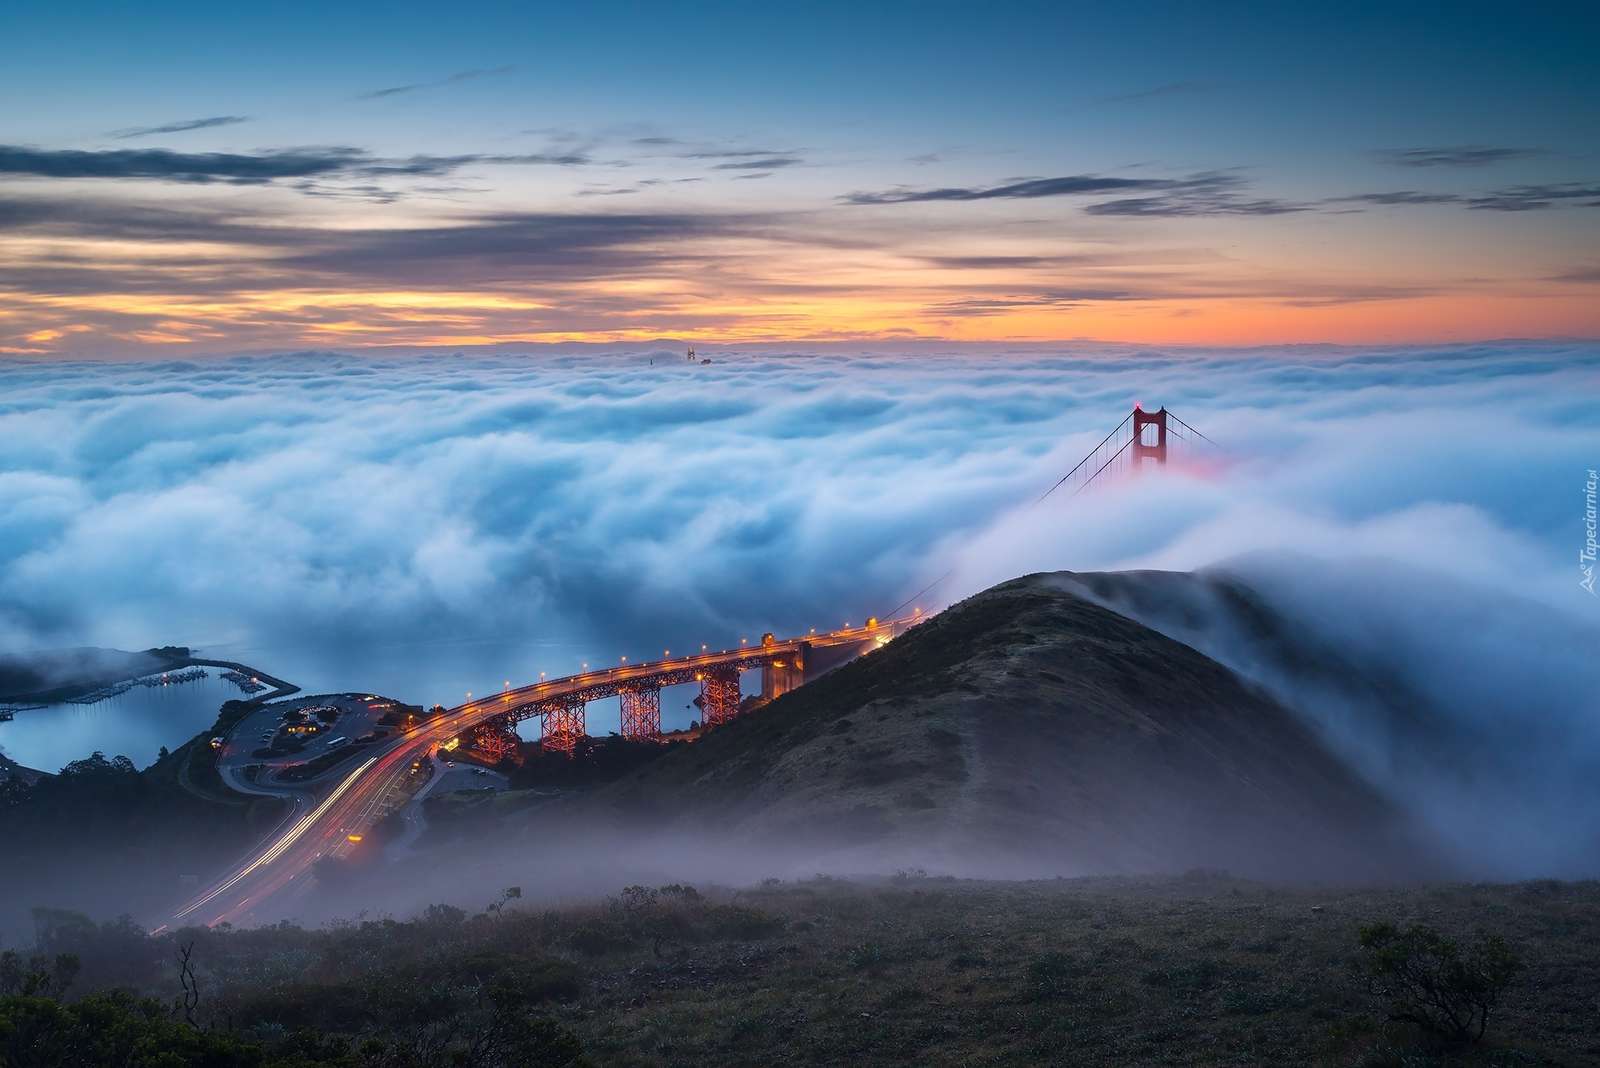 Ponte Golden Gate. puzzle online